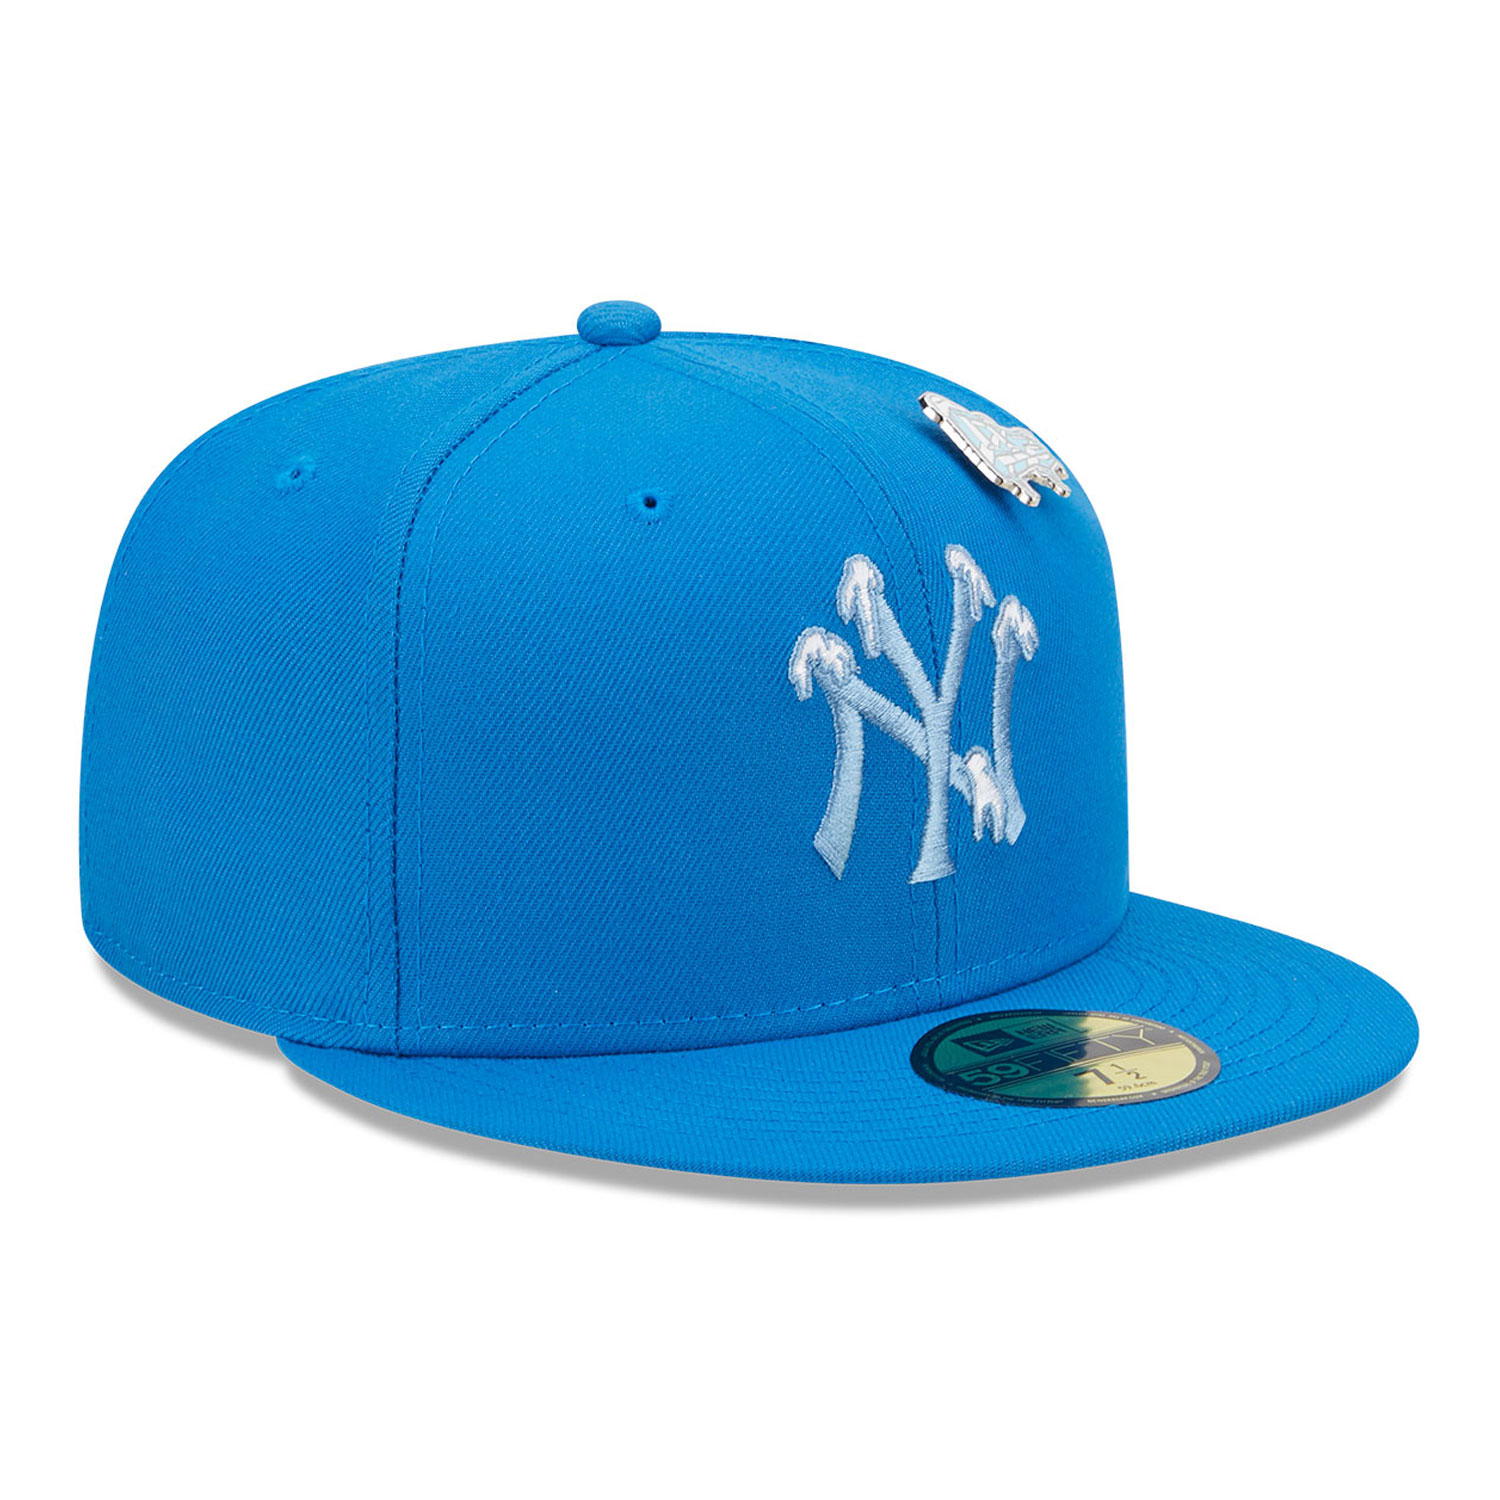 New Era New York Yankees Fitted The Cap The Pros Wear – STUDIIYO23